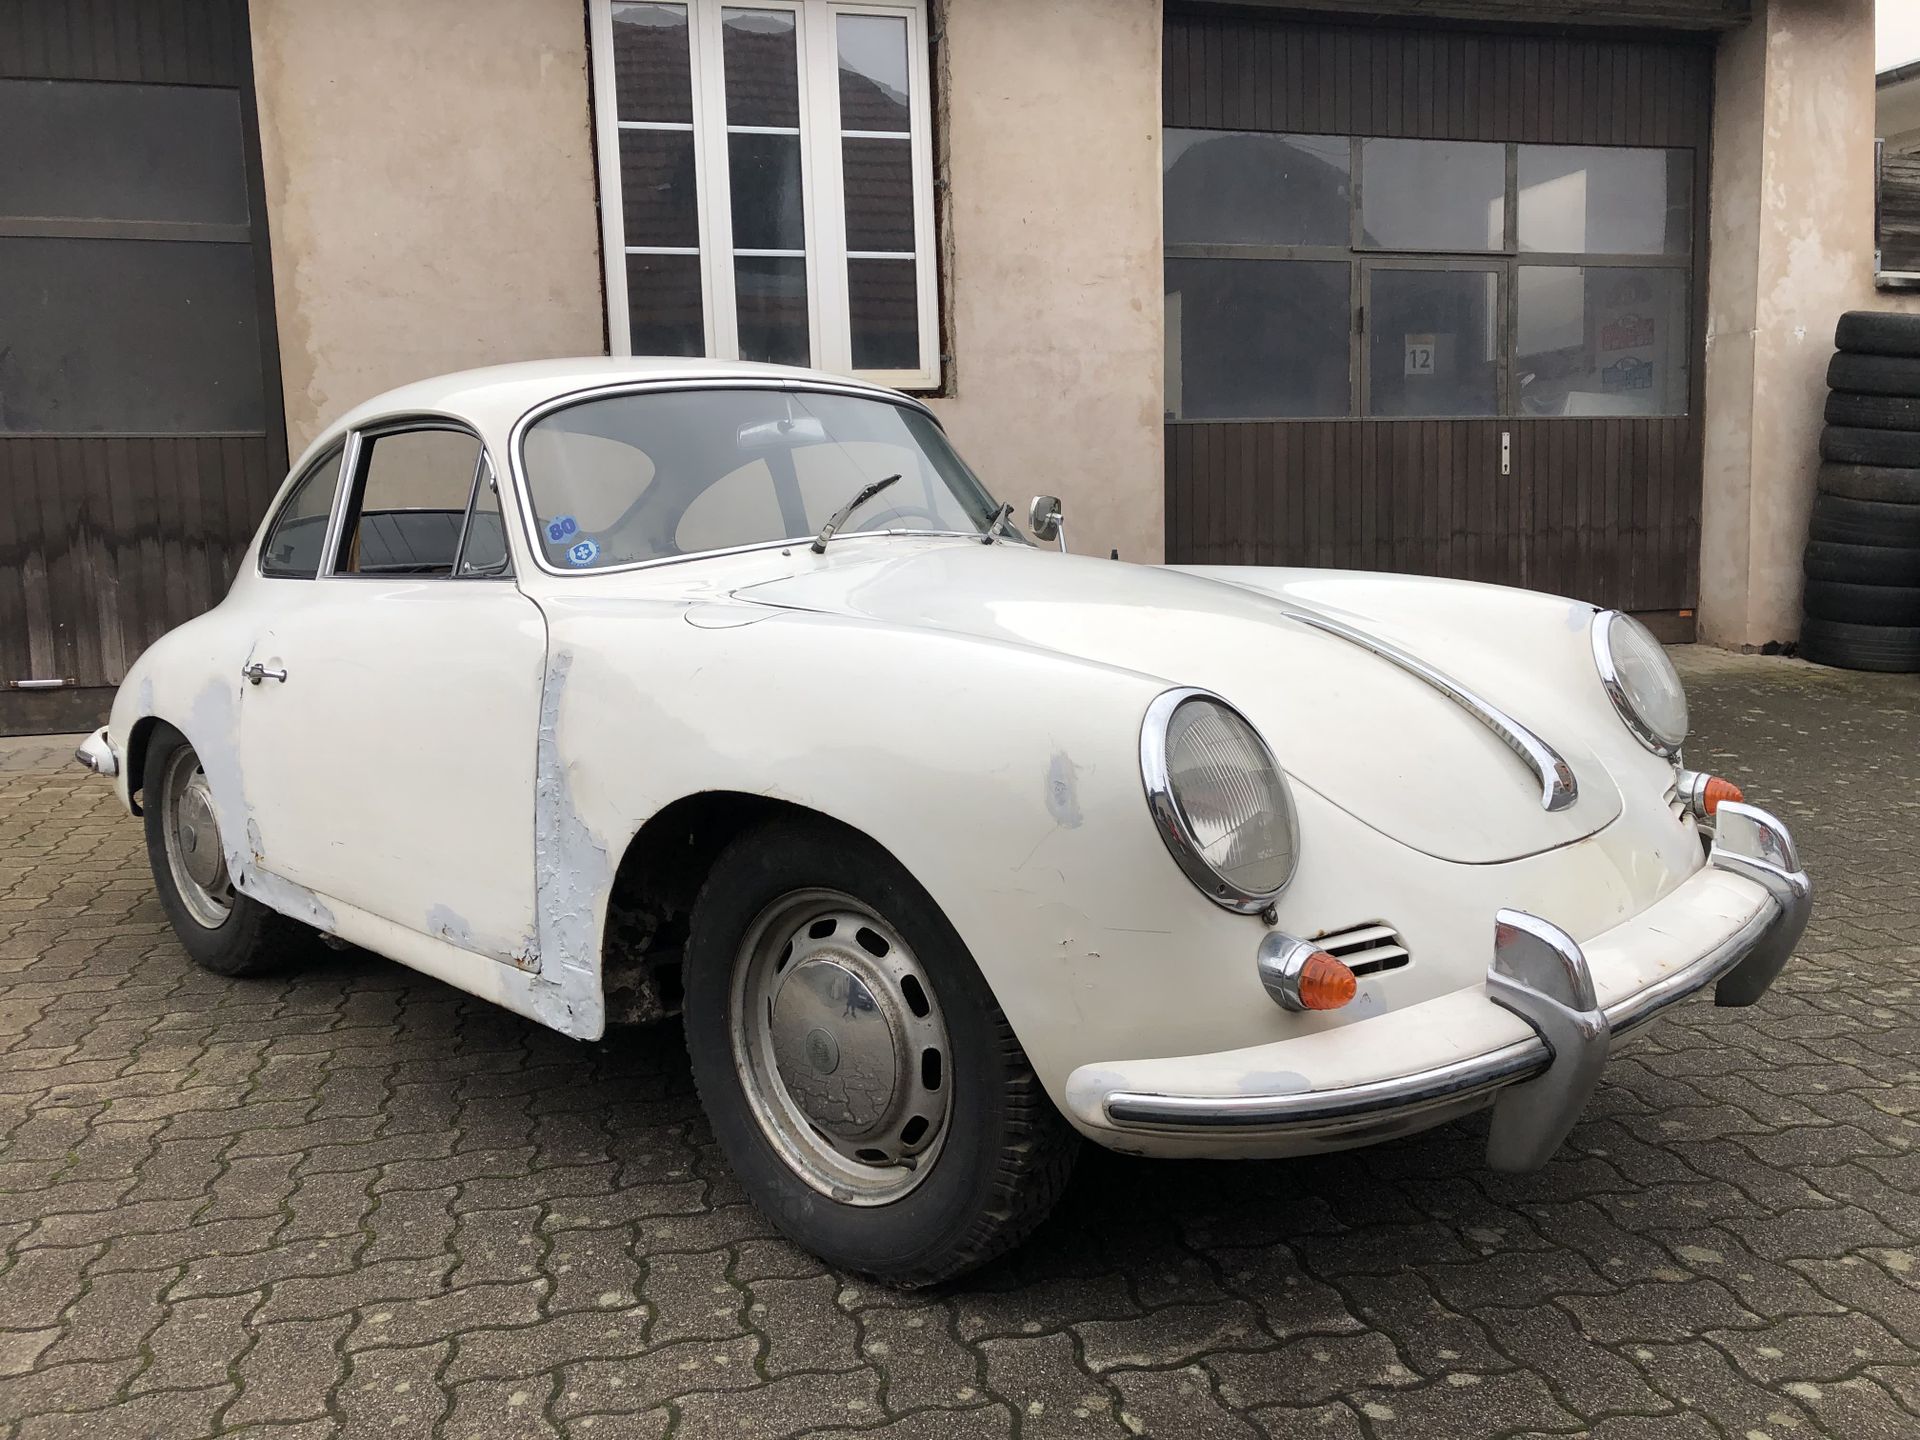 1964 Porsche 356 C 1600 序列号: 130870

发动机编号：732438

法国CG

从历史上看，保时捷356是保时捷制造和销售的第&hellip;